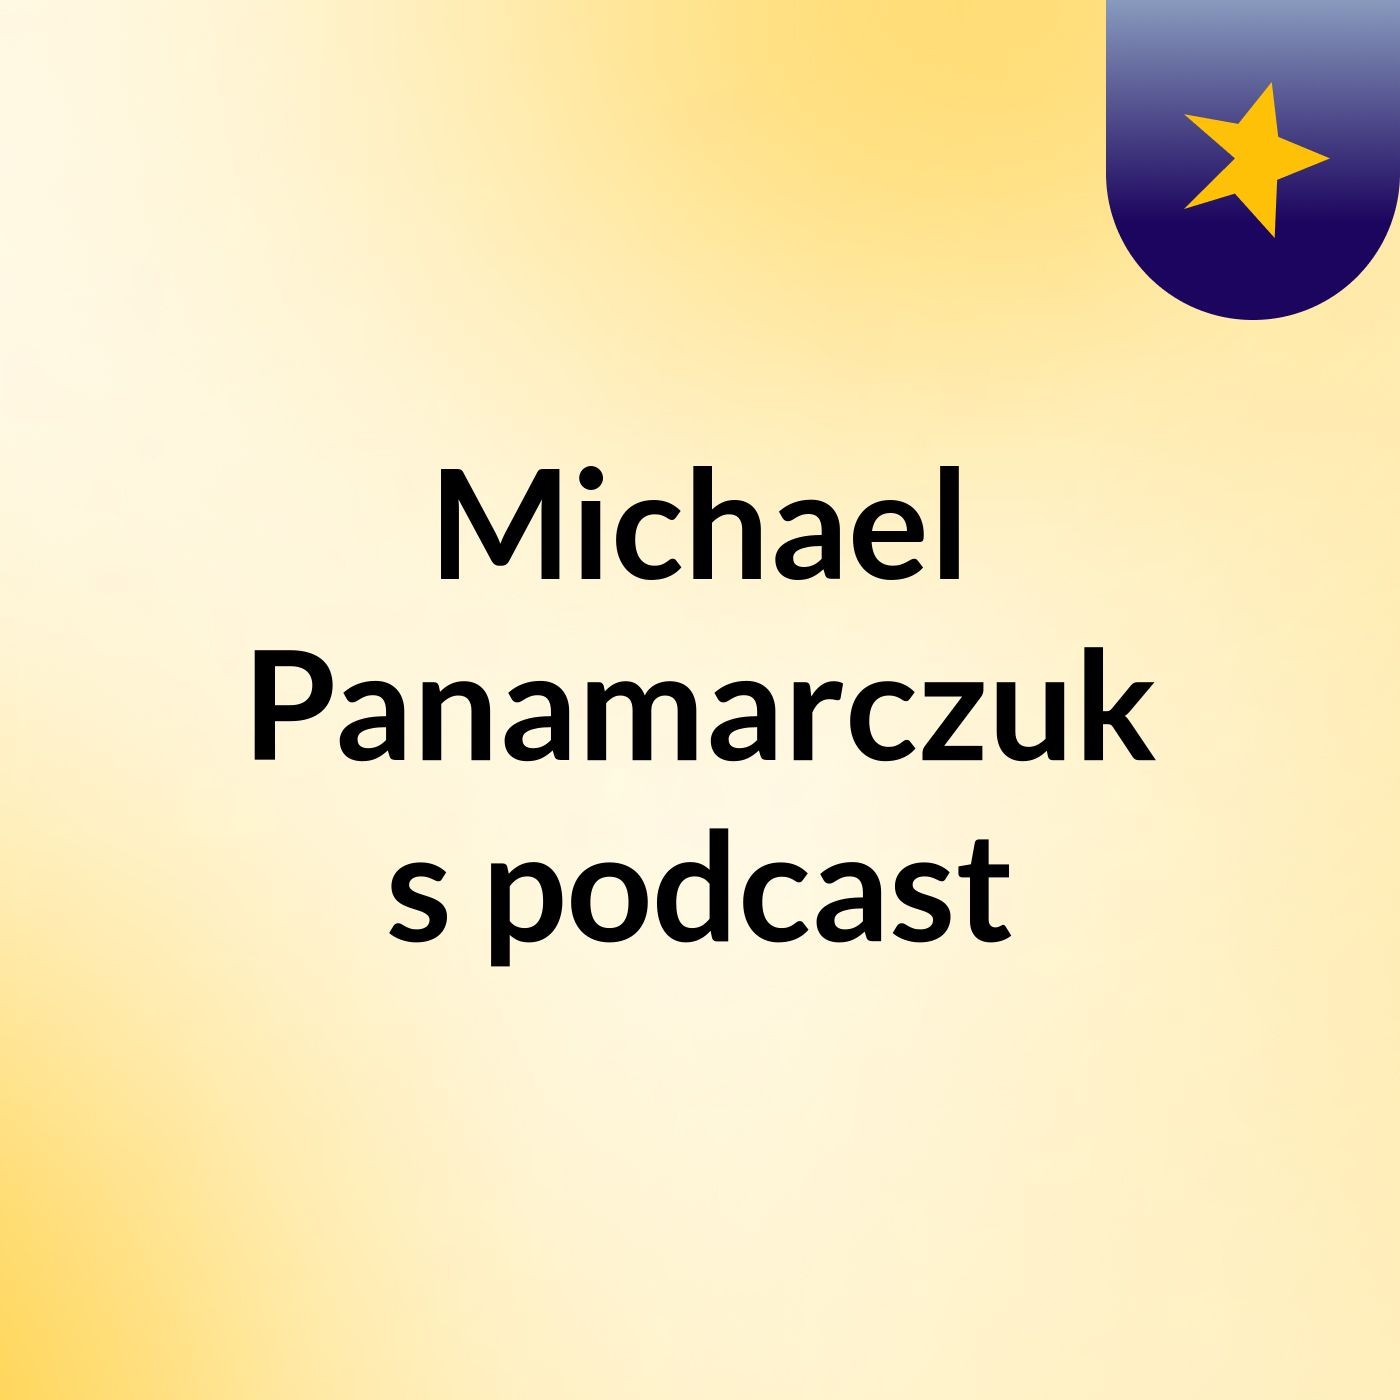 Episode 6 - Michael Panamarczuk's podcast